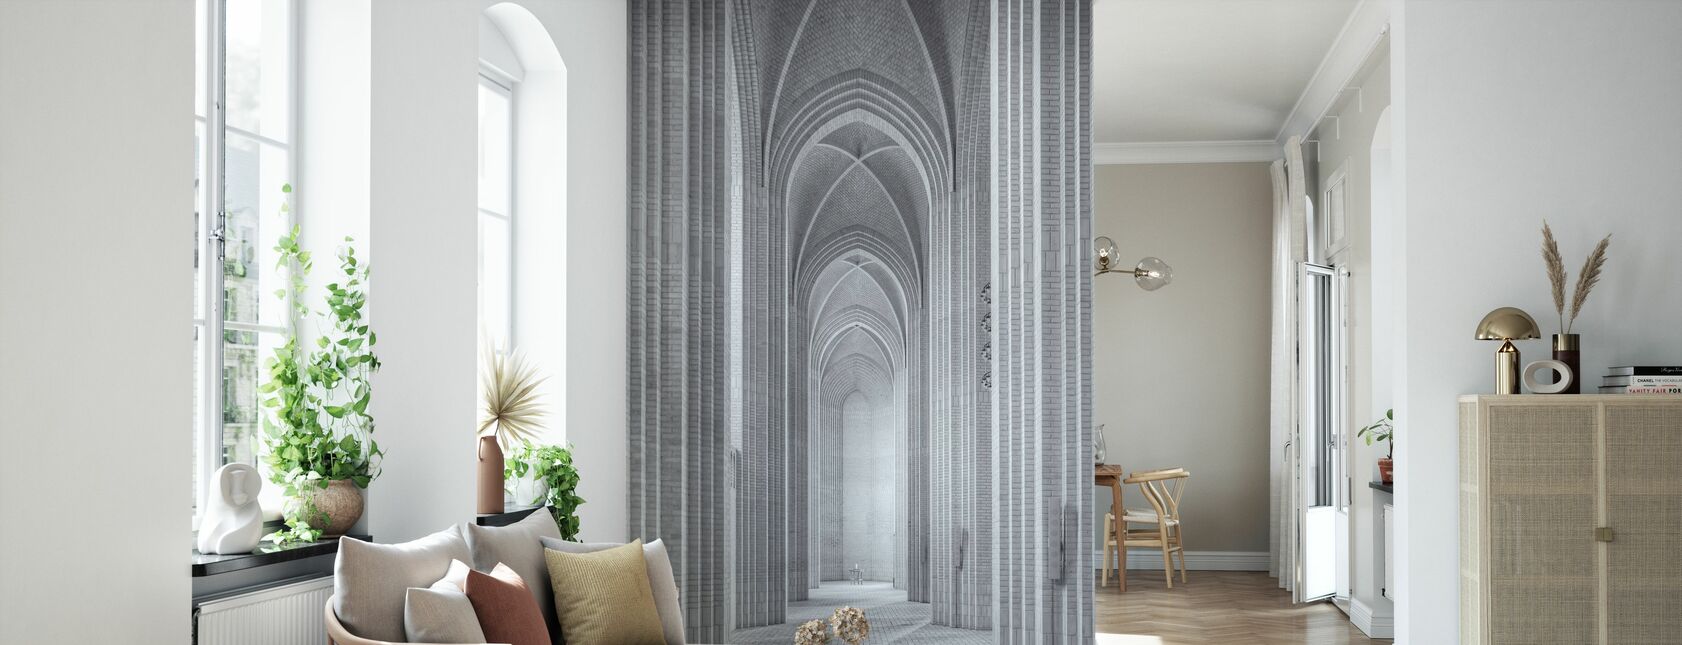 Grundtvig Church - Wallpaper - Living Room